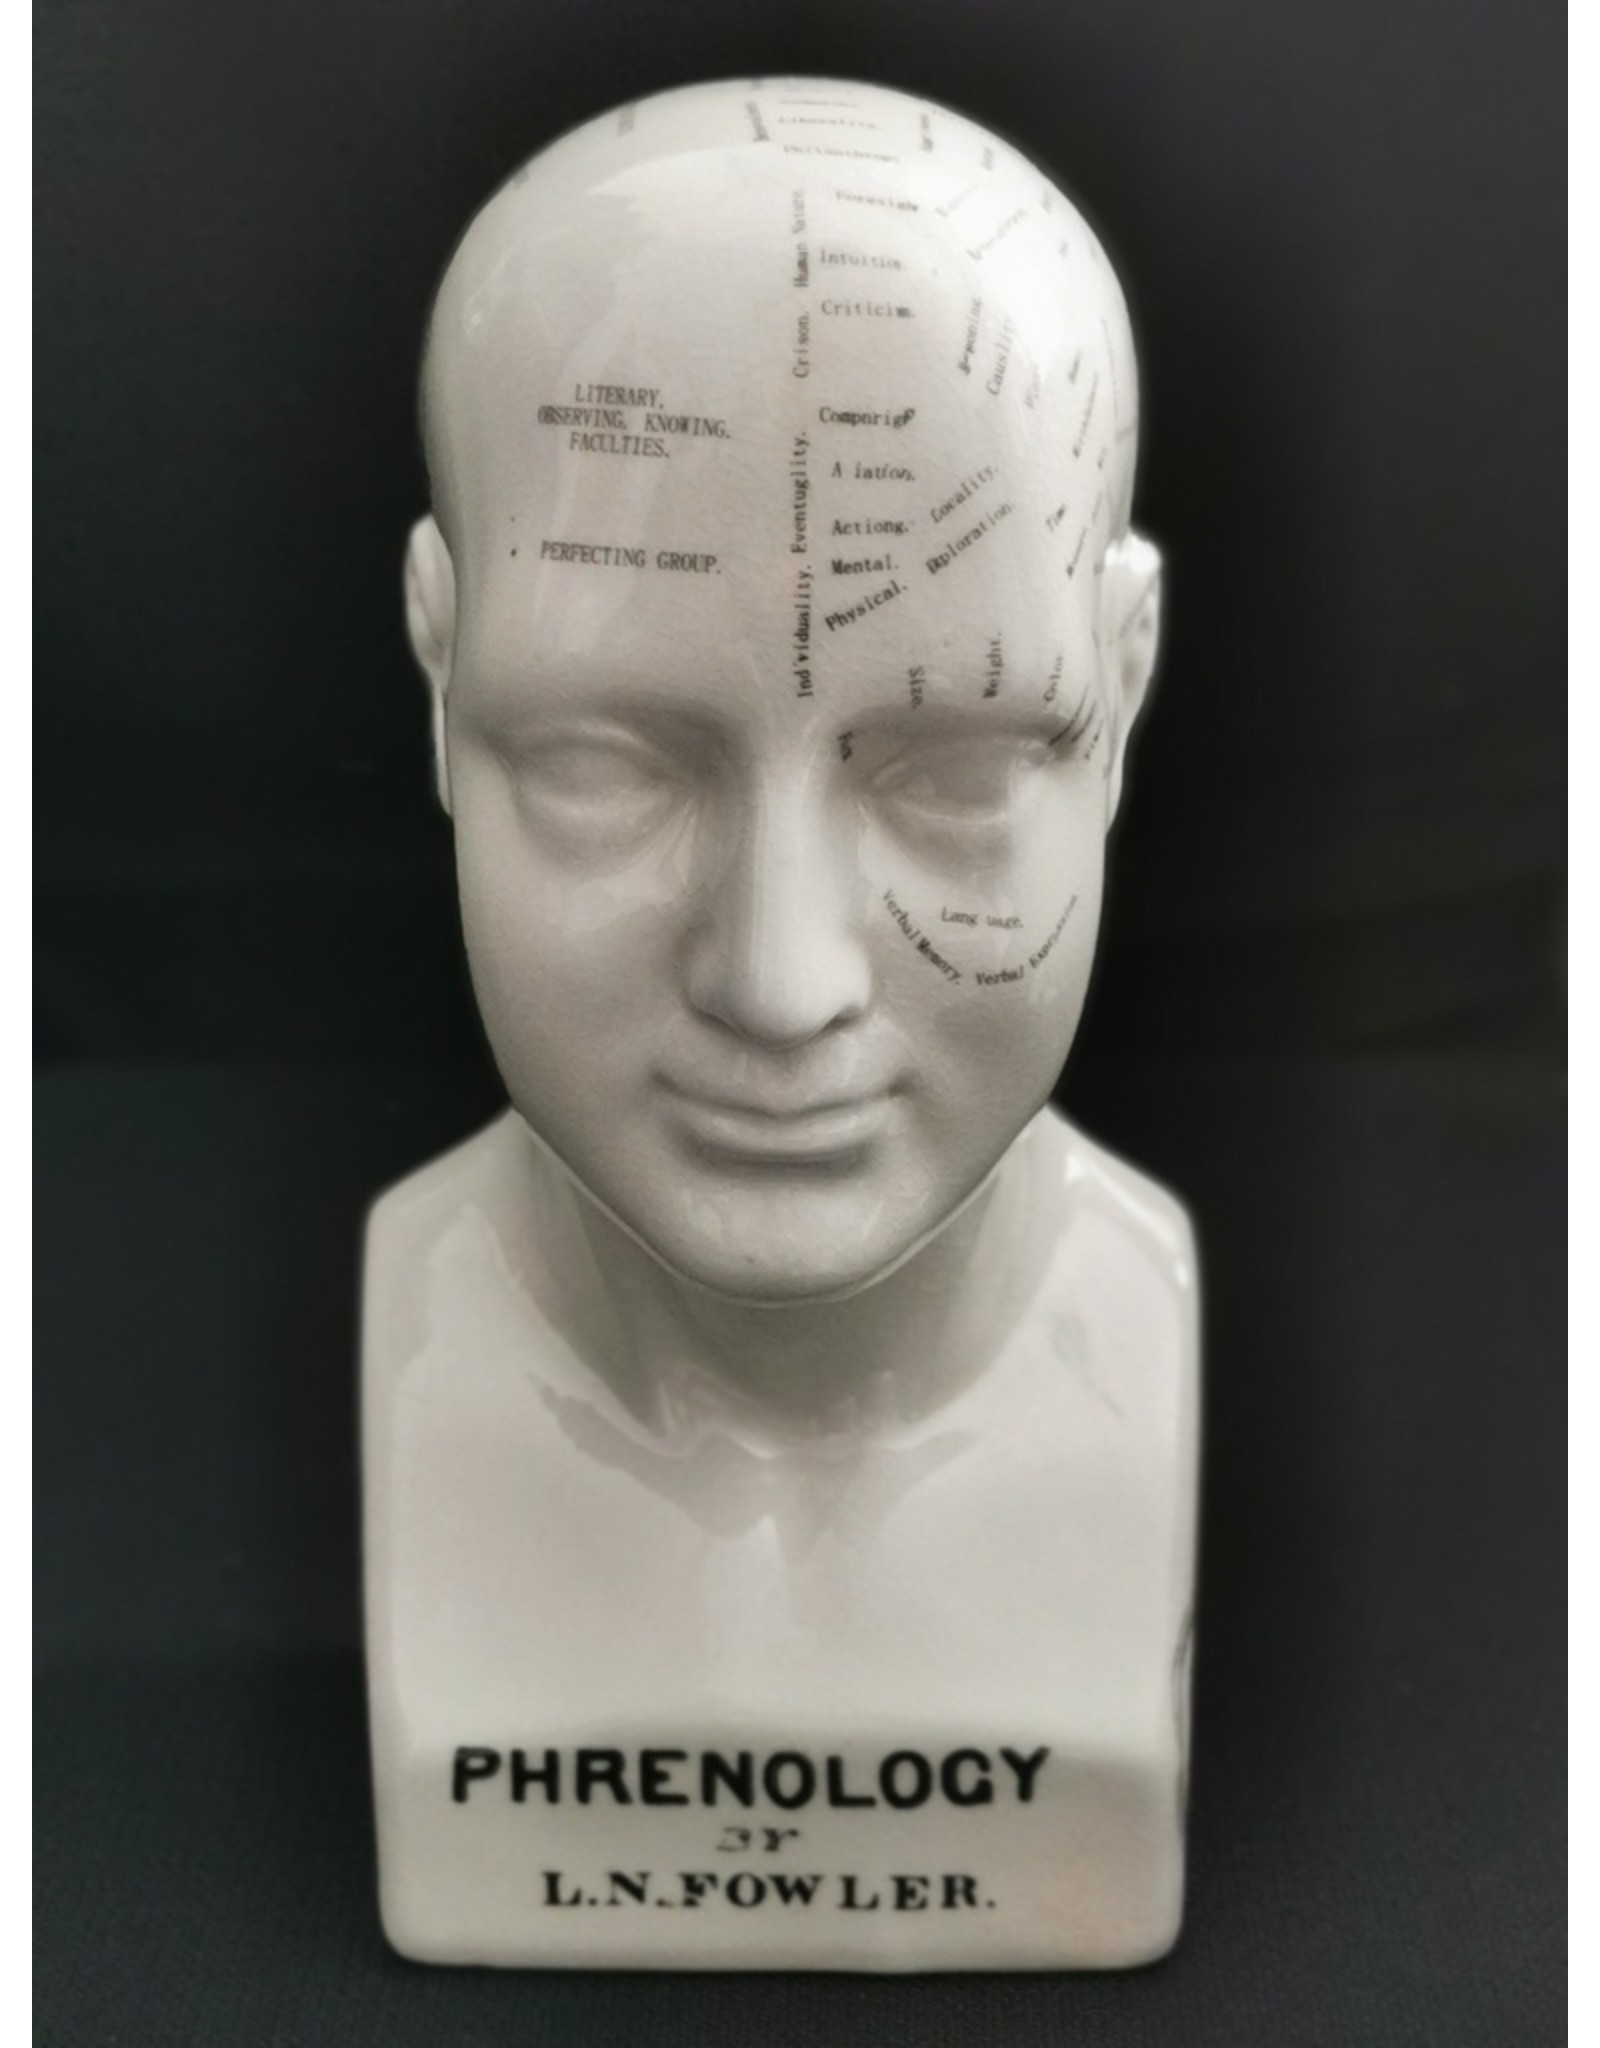 Trukado Miscellaneous - Phrenology  Ceramic Head Large (23cm)